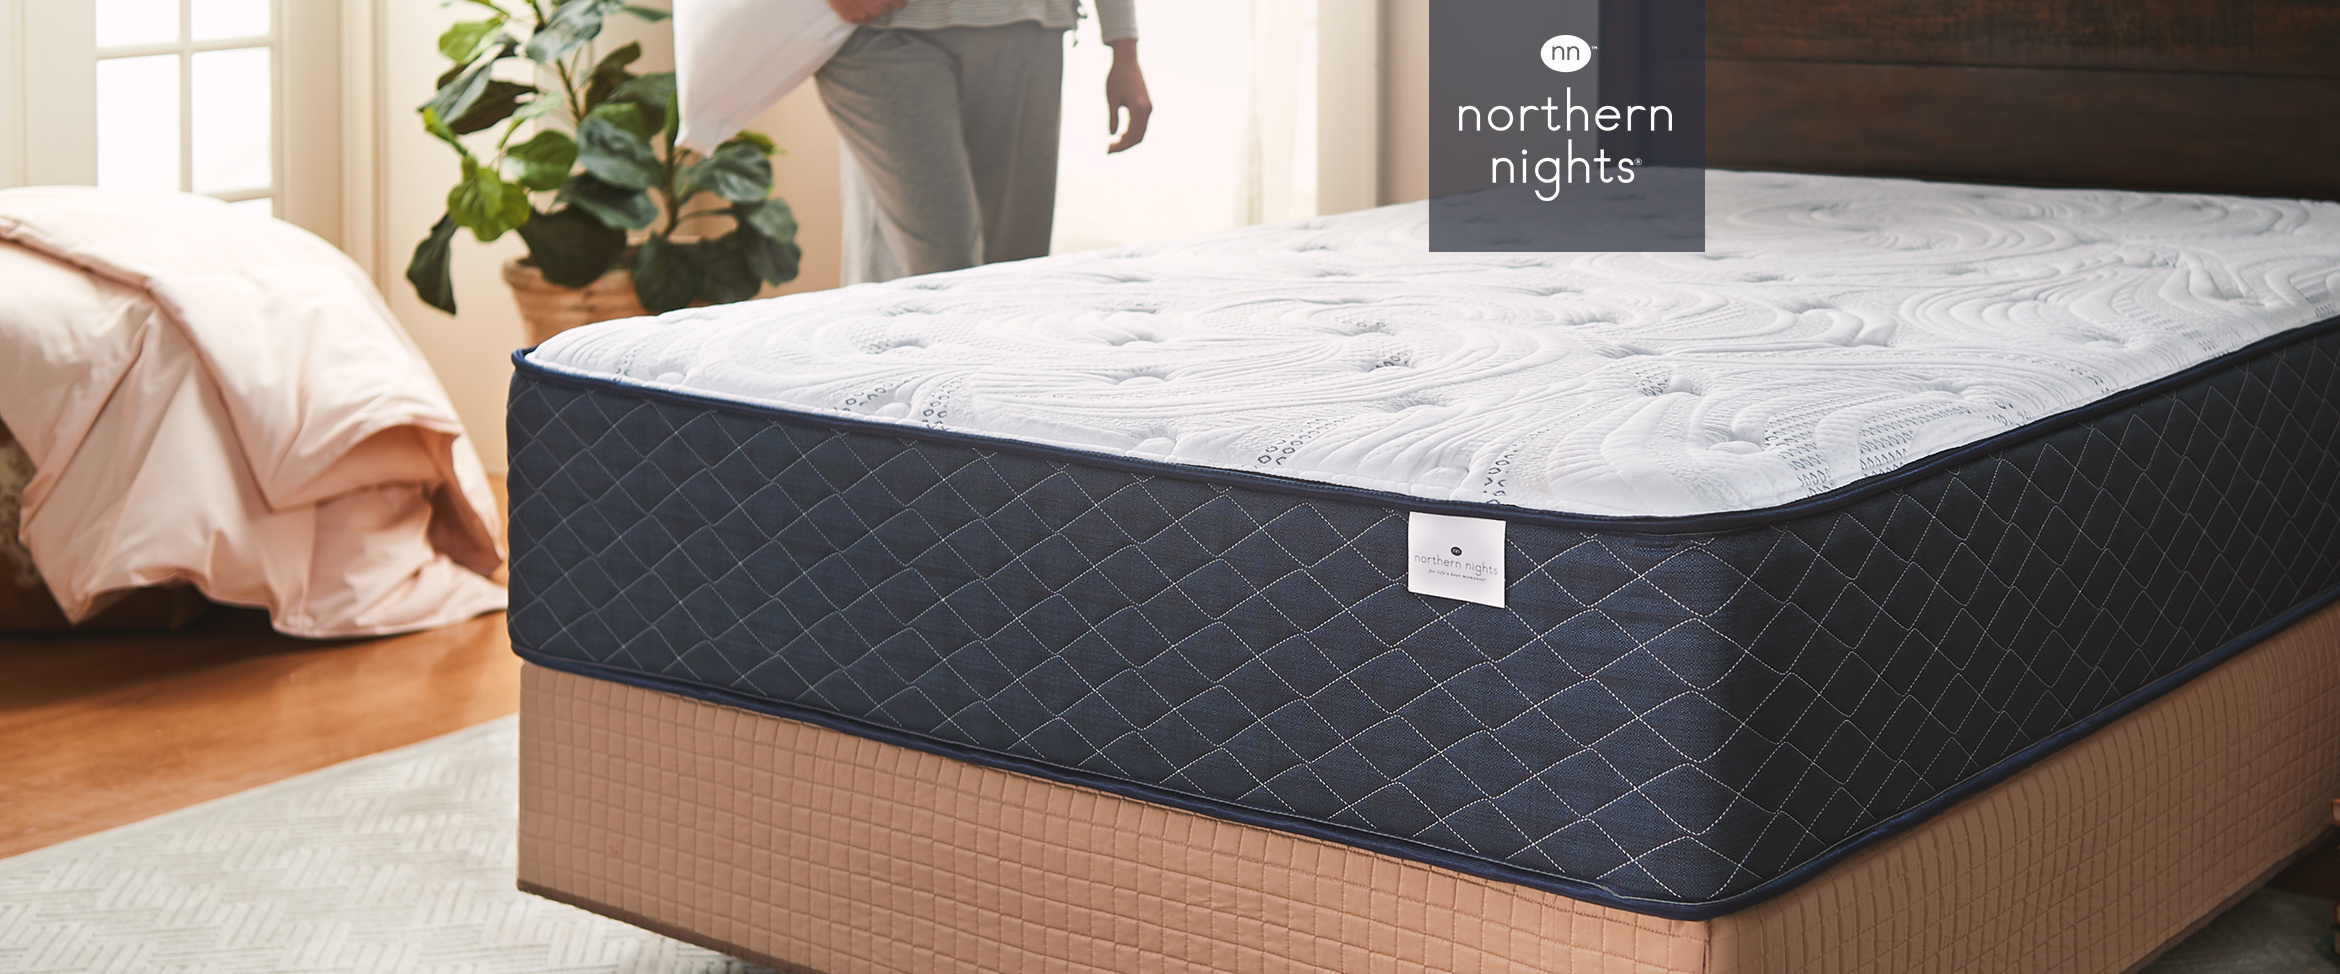 northern nights tranquility mattress reviews